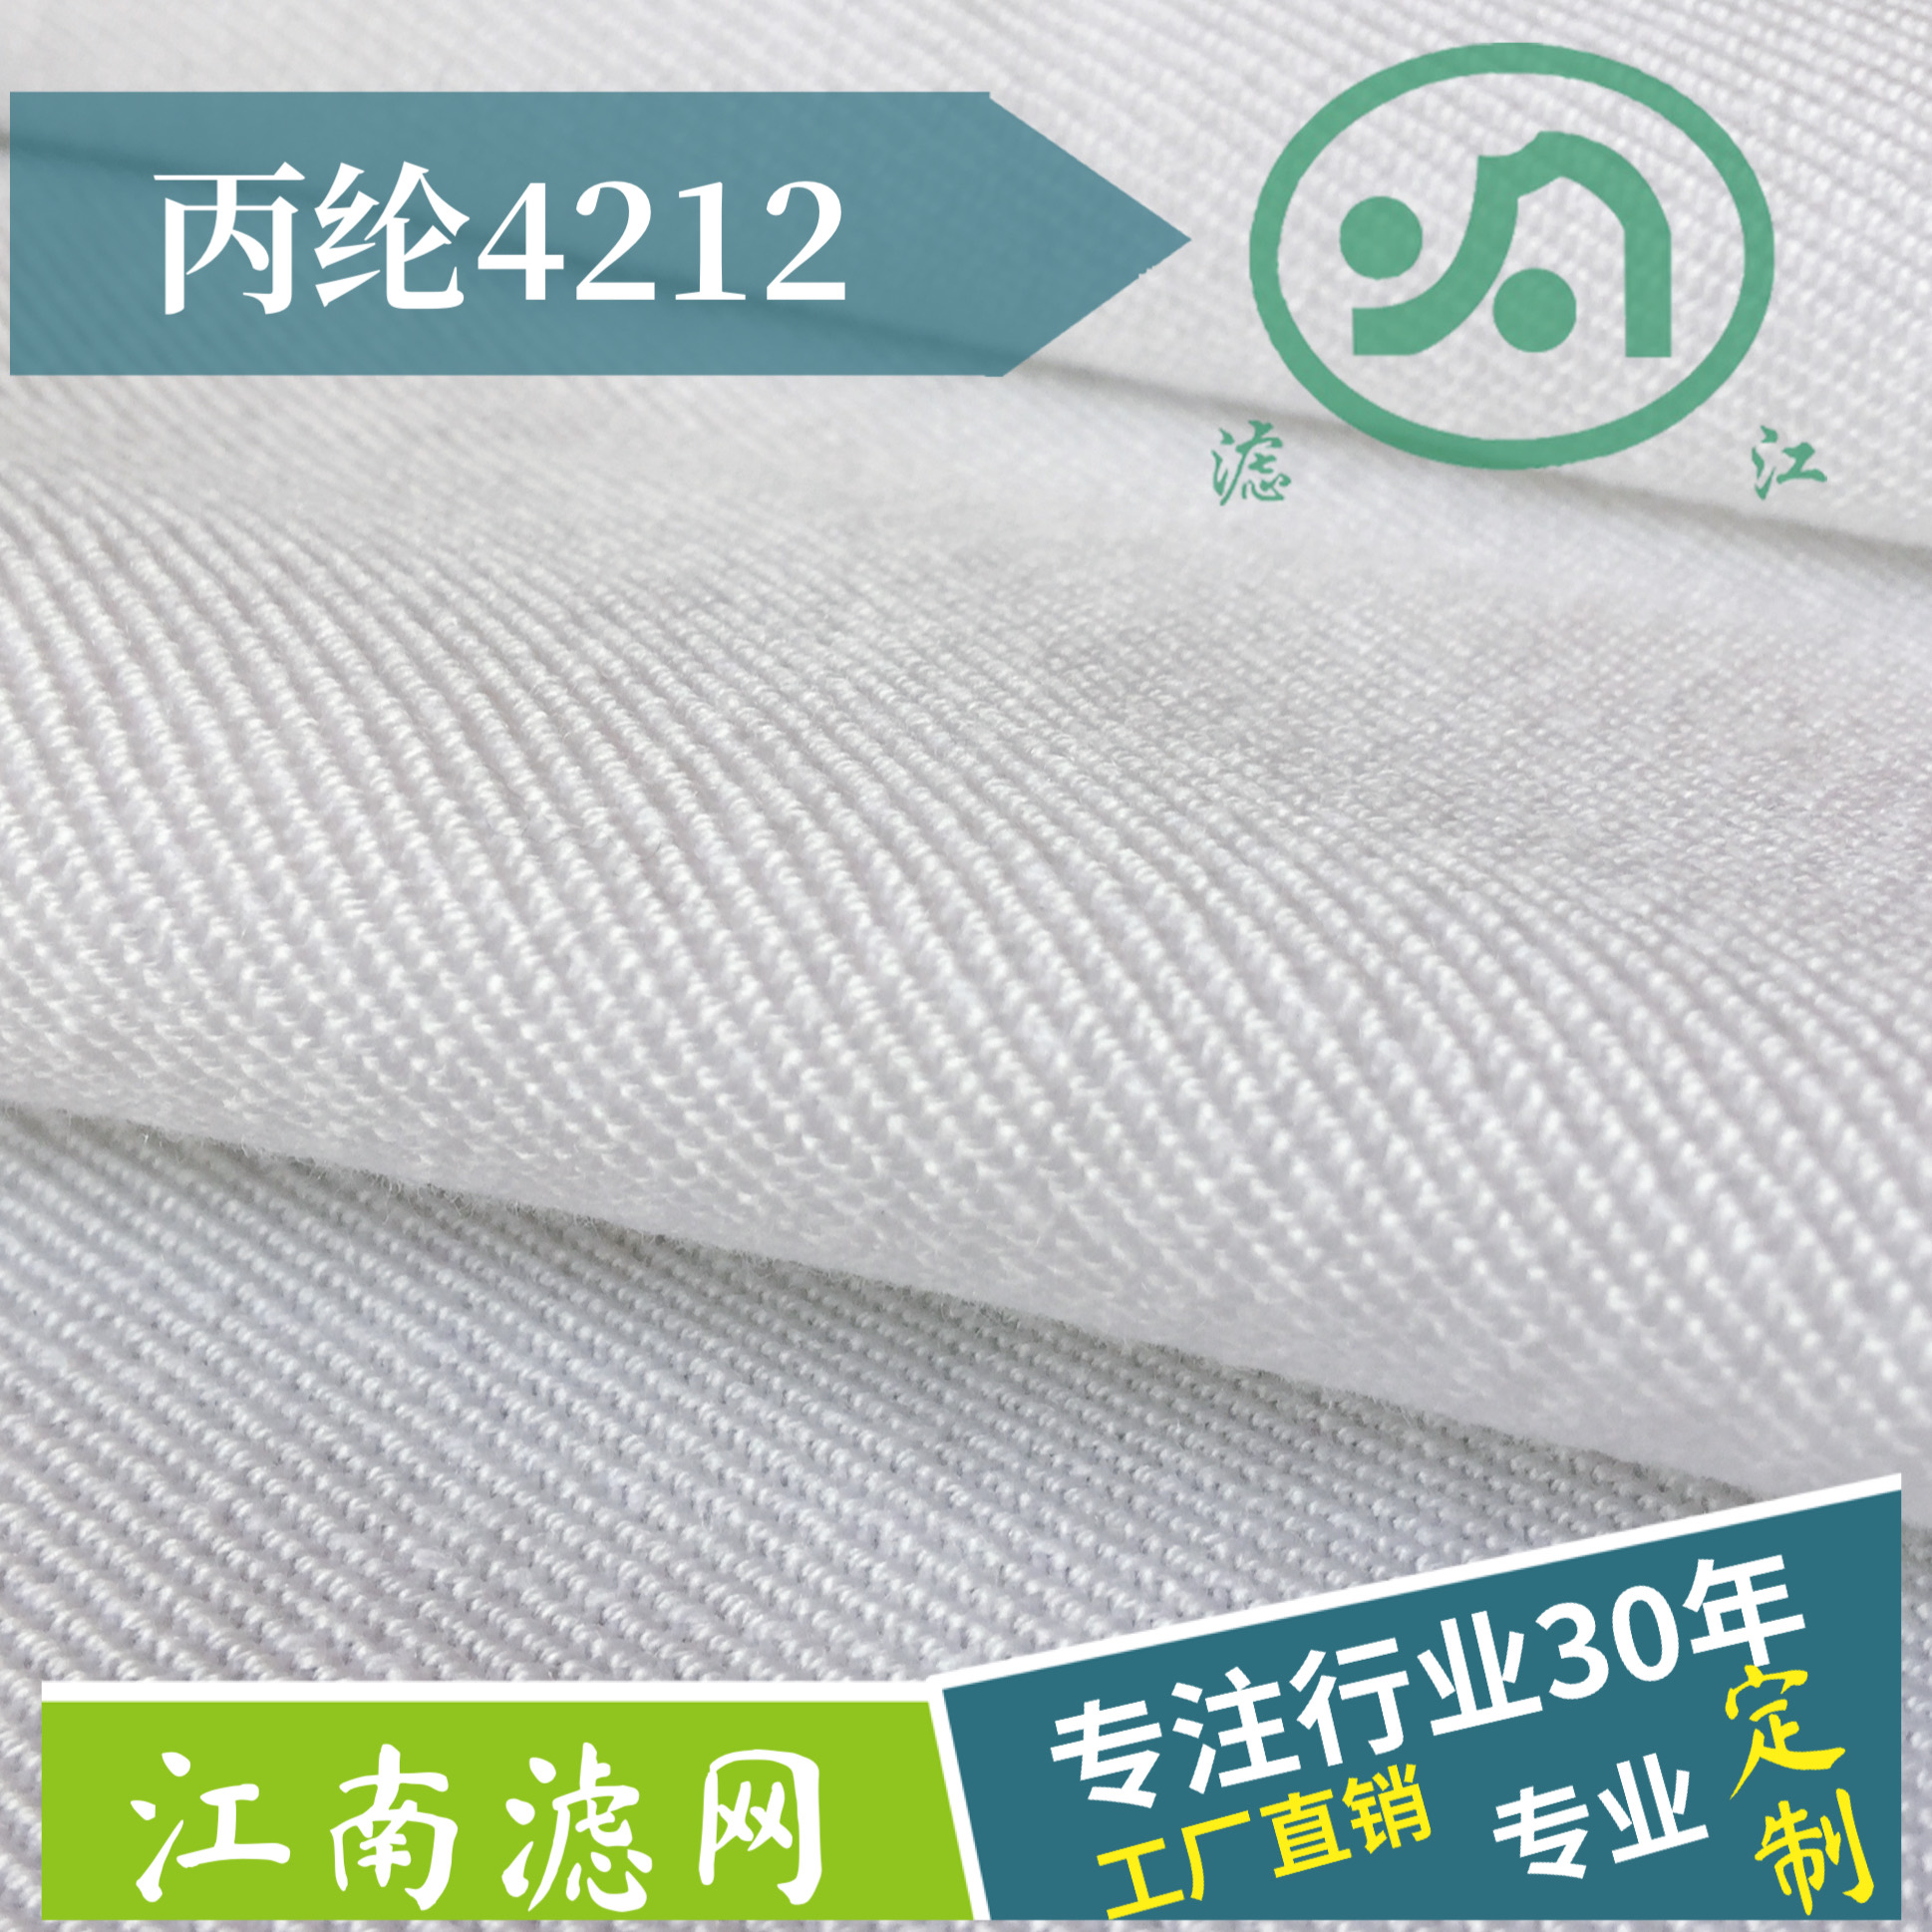 Polypropylene filter cloth 4212